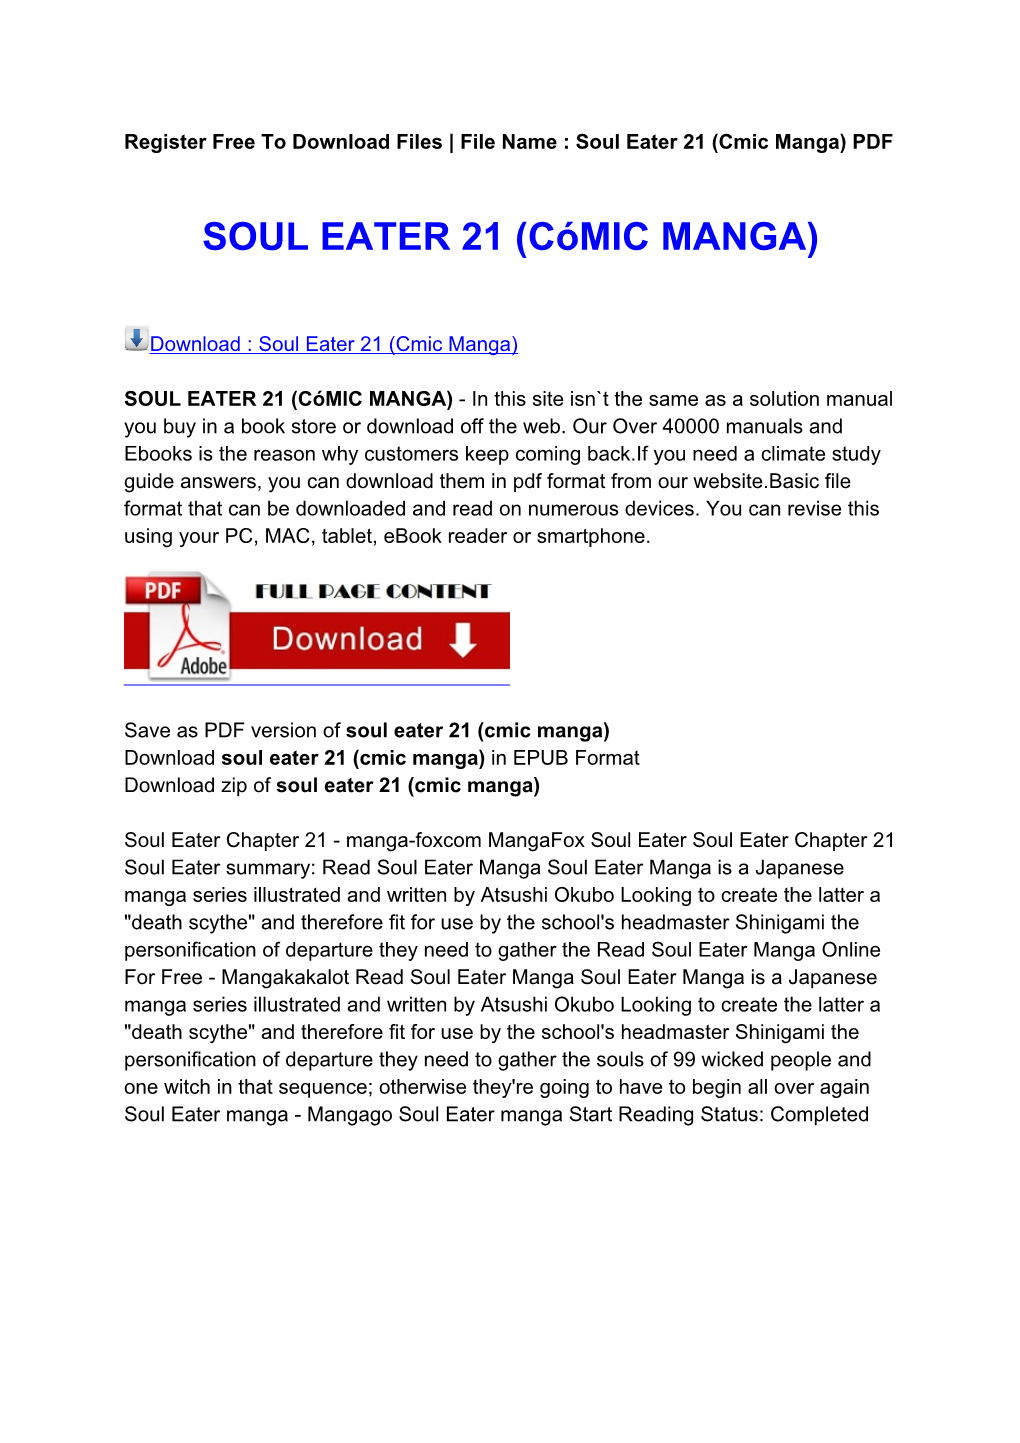 Free Soul Eater 21 (Cã³mic Manga)